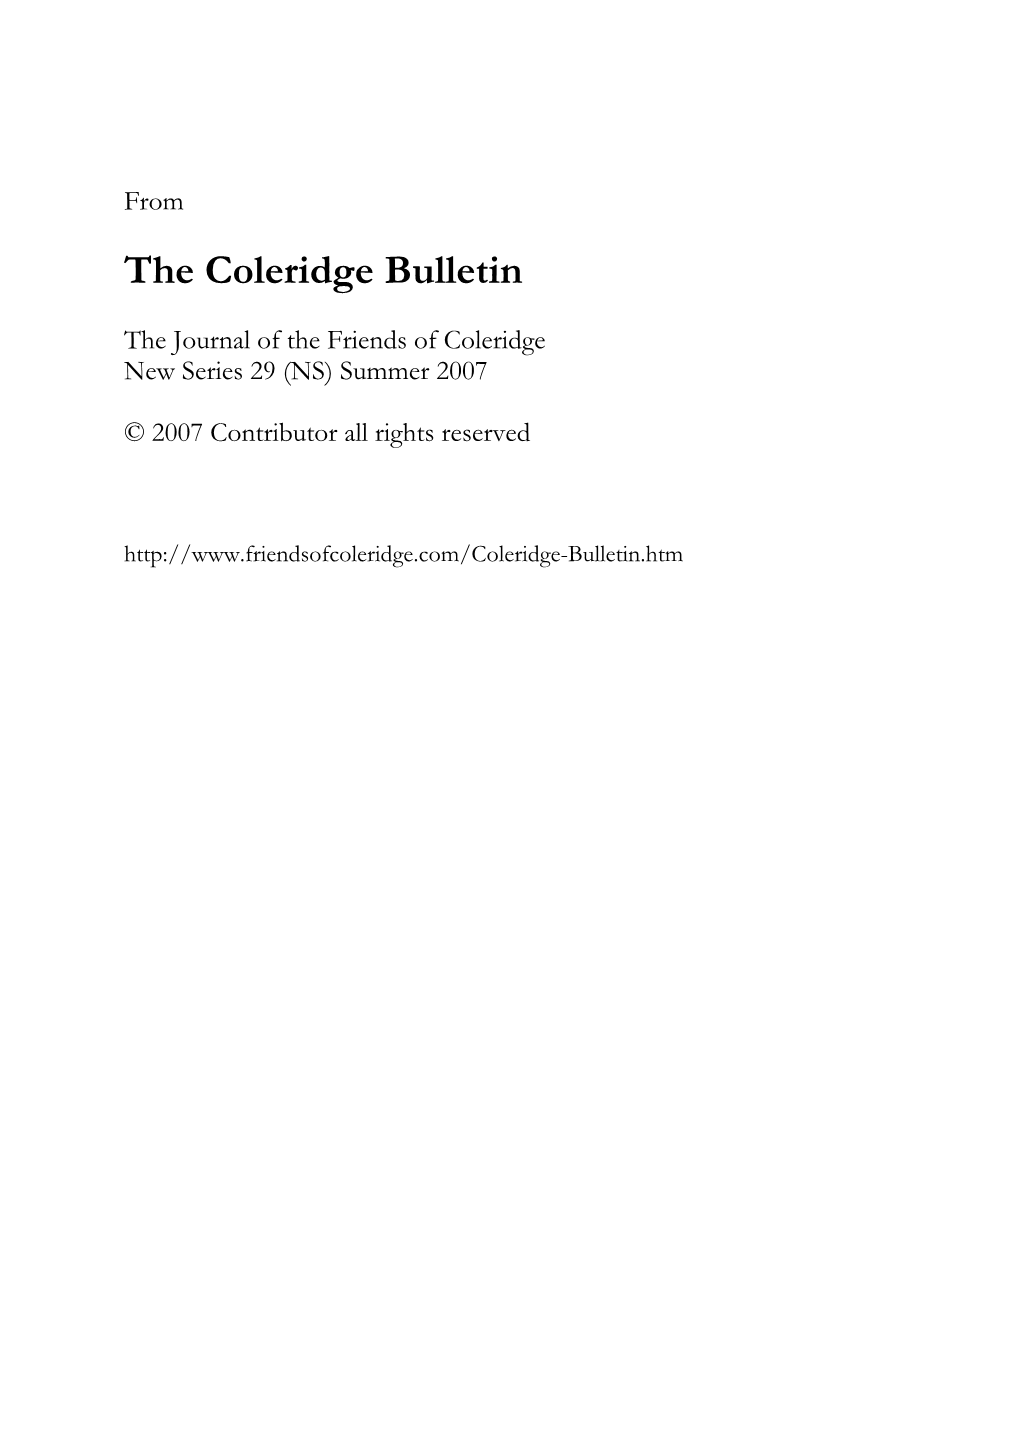 Coleridge's Malta